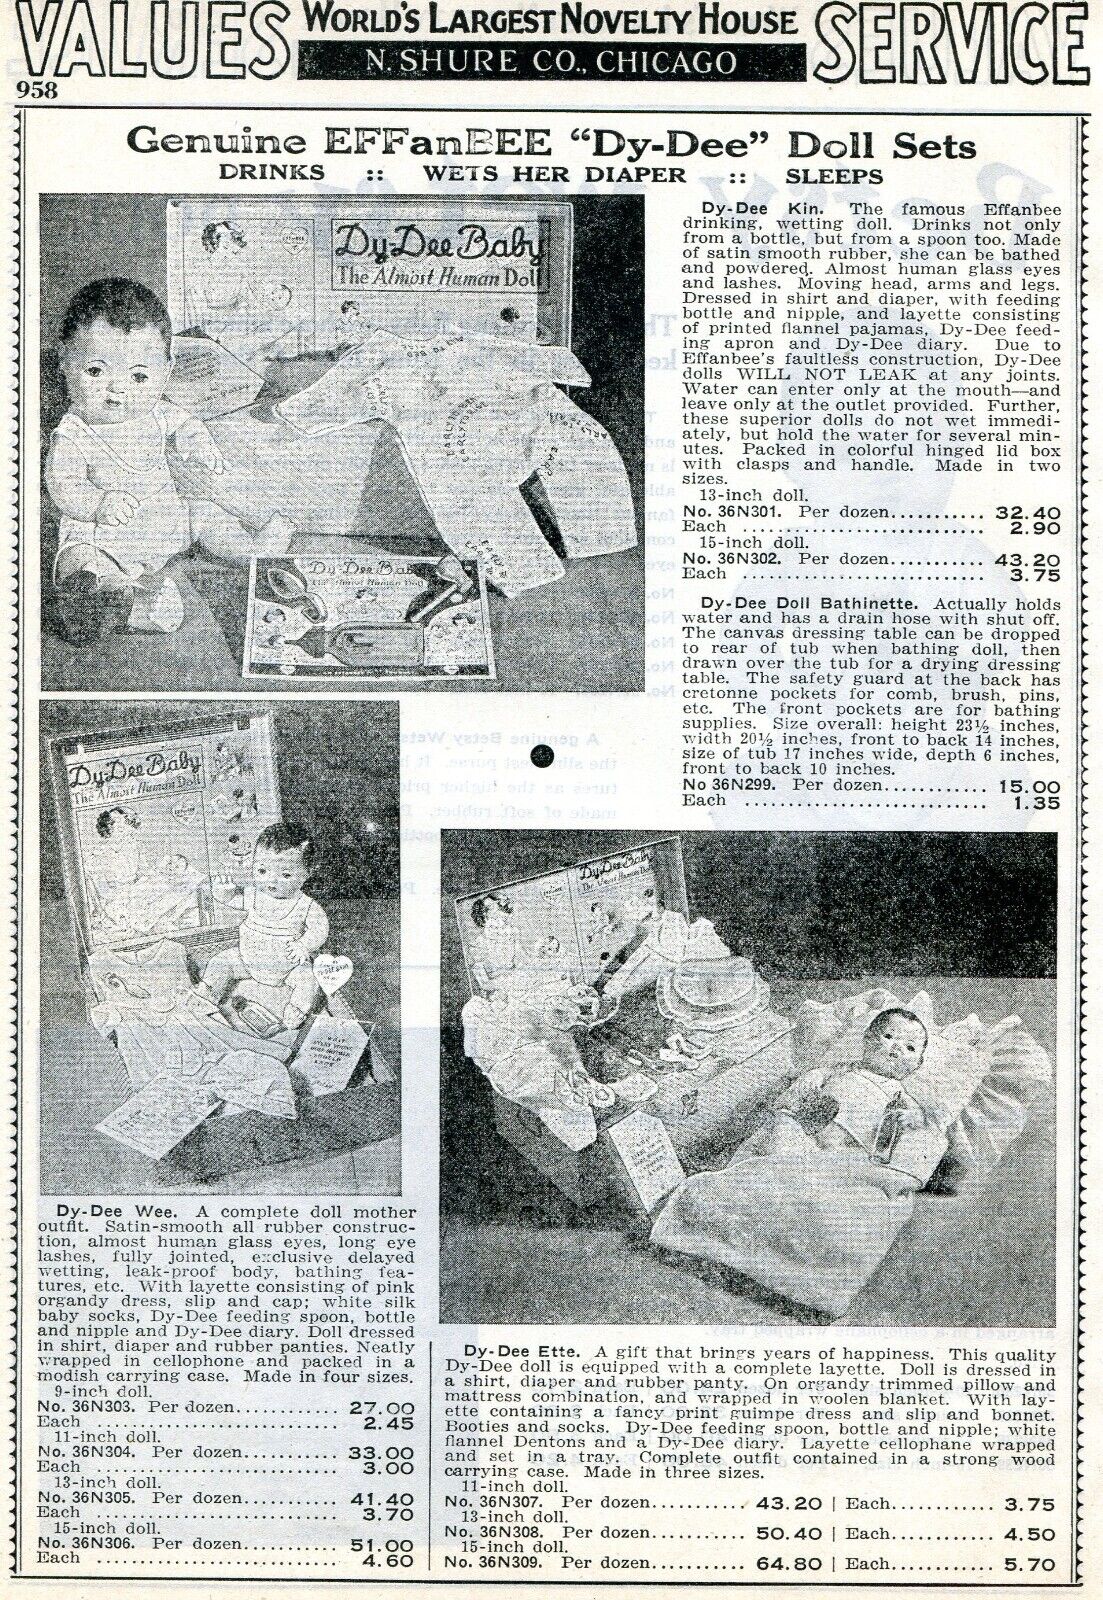 1938 Print Ad of EFFanBEE Dy-Dee Baby Doll Sets Kin Wee Ette